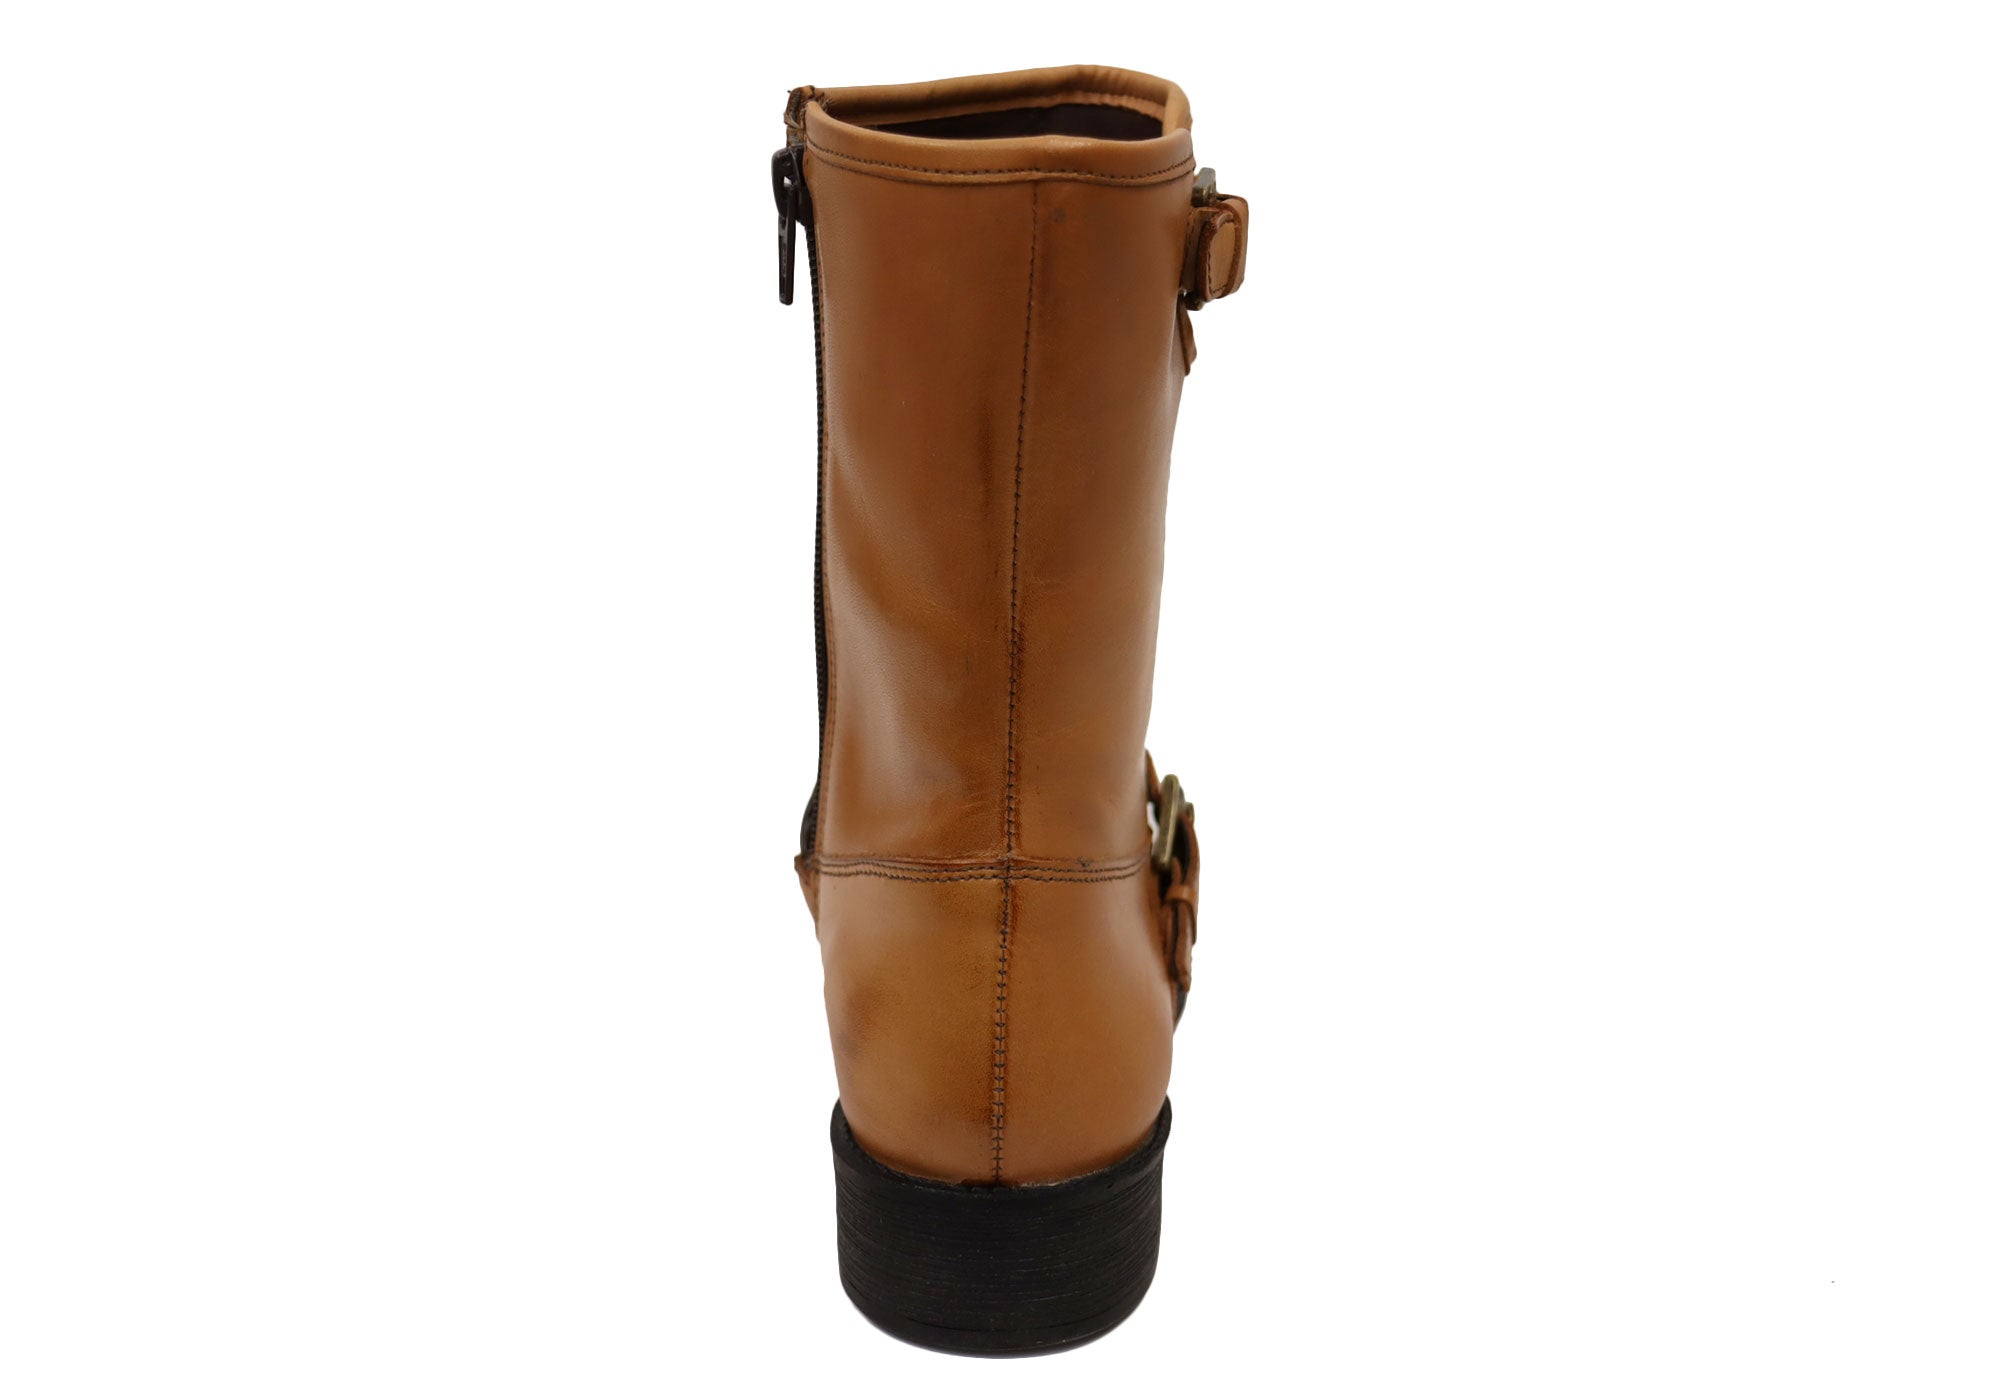 Via Paula Betty Womens Comfort Brazilian Leather Mid Calf Boots